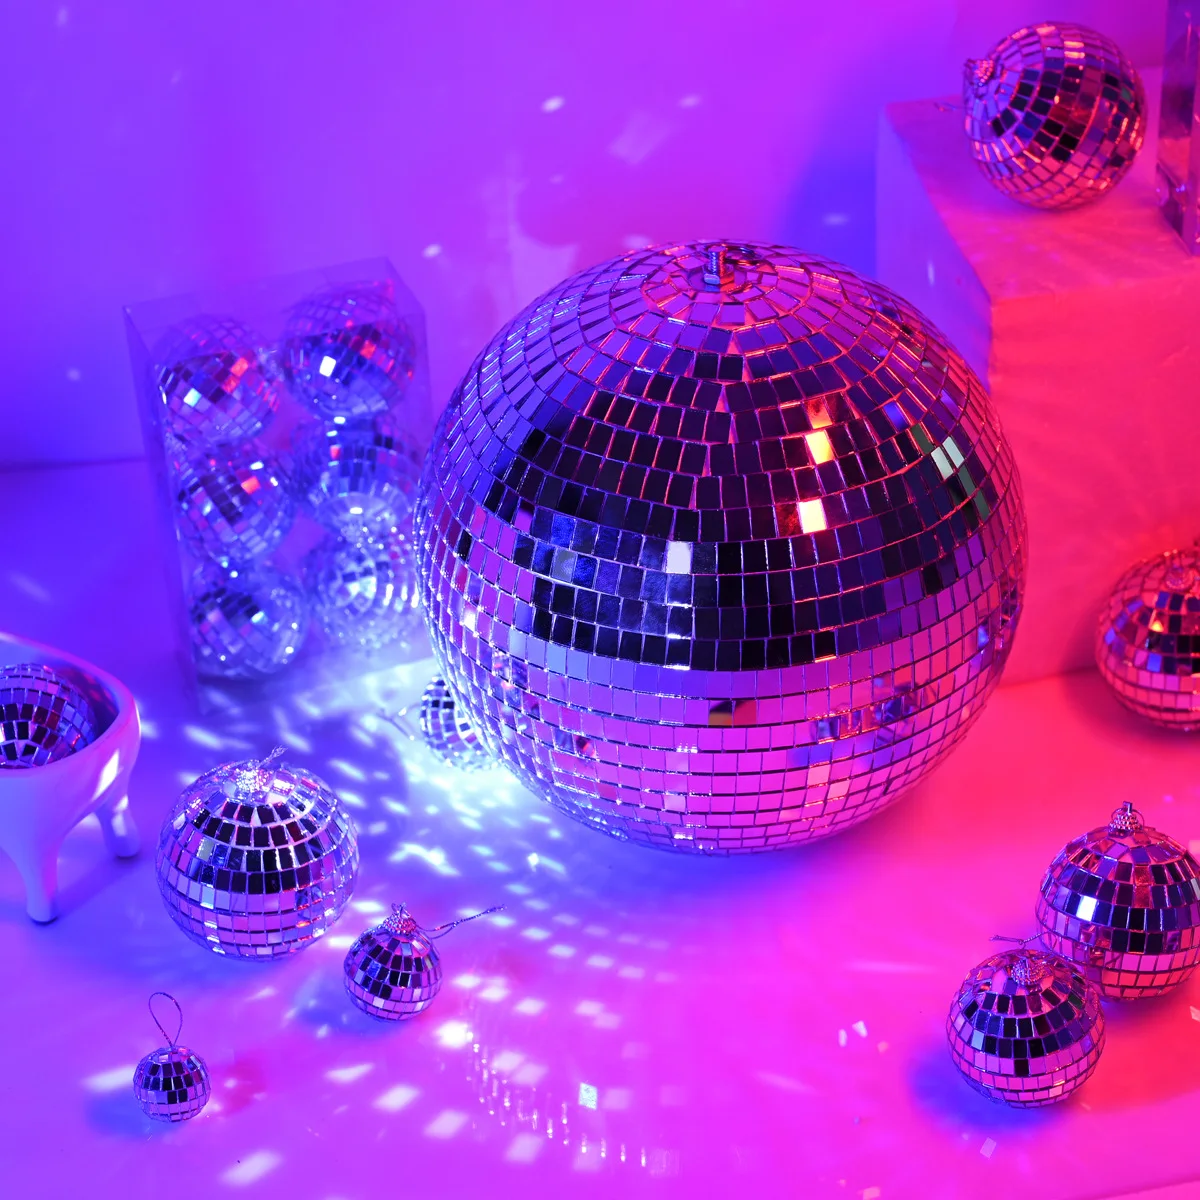 https://ae01.alicdn.com/kf/S4b9400731dc14468affaadbb30da38290/Disco-Ball-Mirror-Ball-Reflective-Glass10-15-20-30Cm-Rotating-Mirror-Ball-Light-Christmas-Party-Wedding.jpg